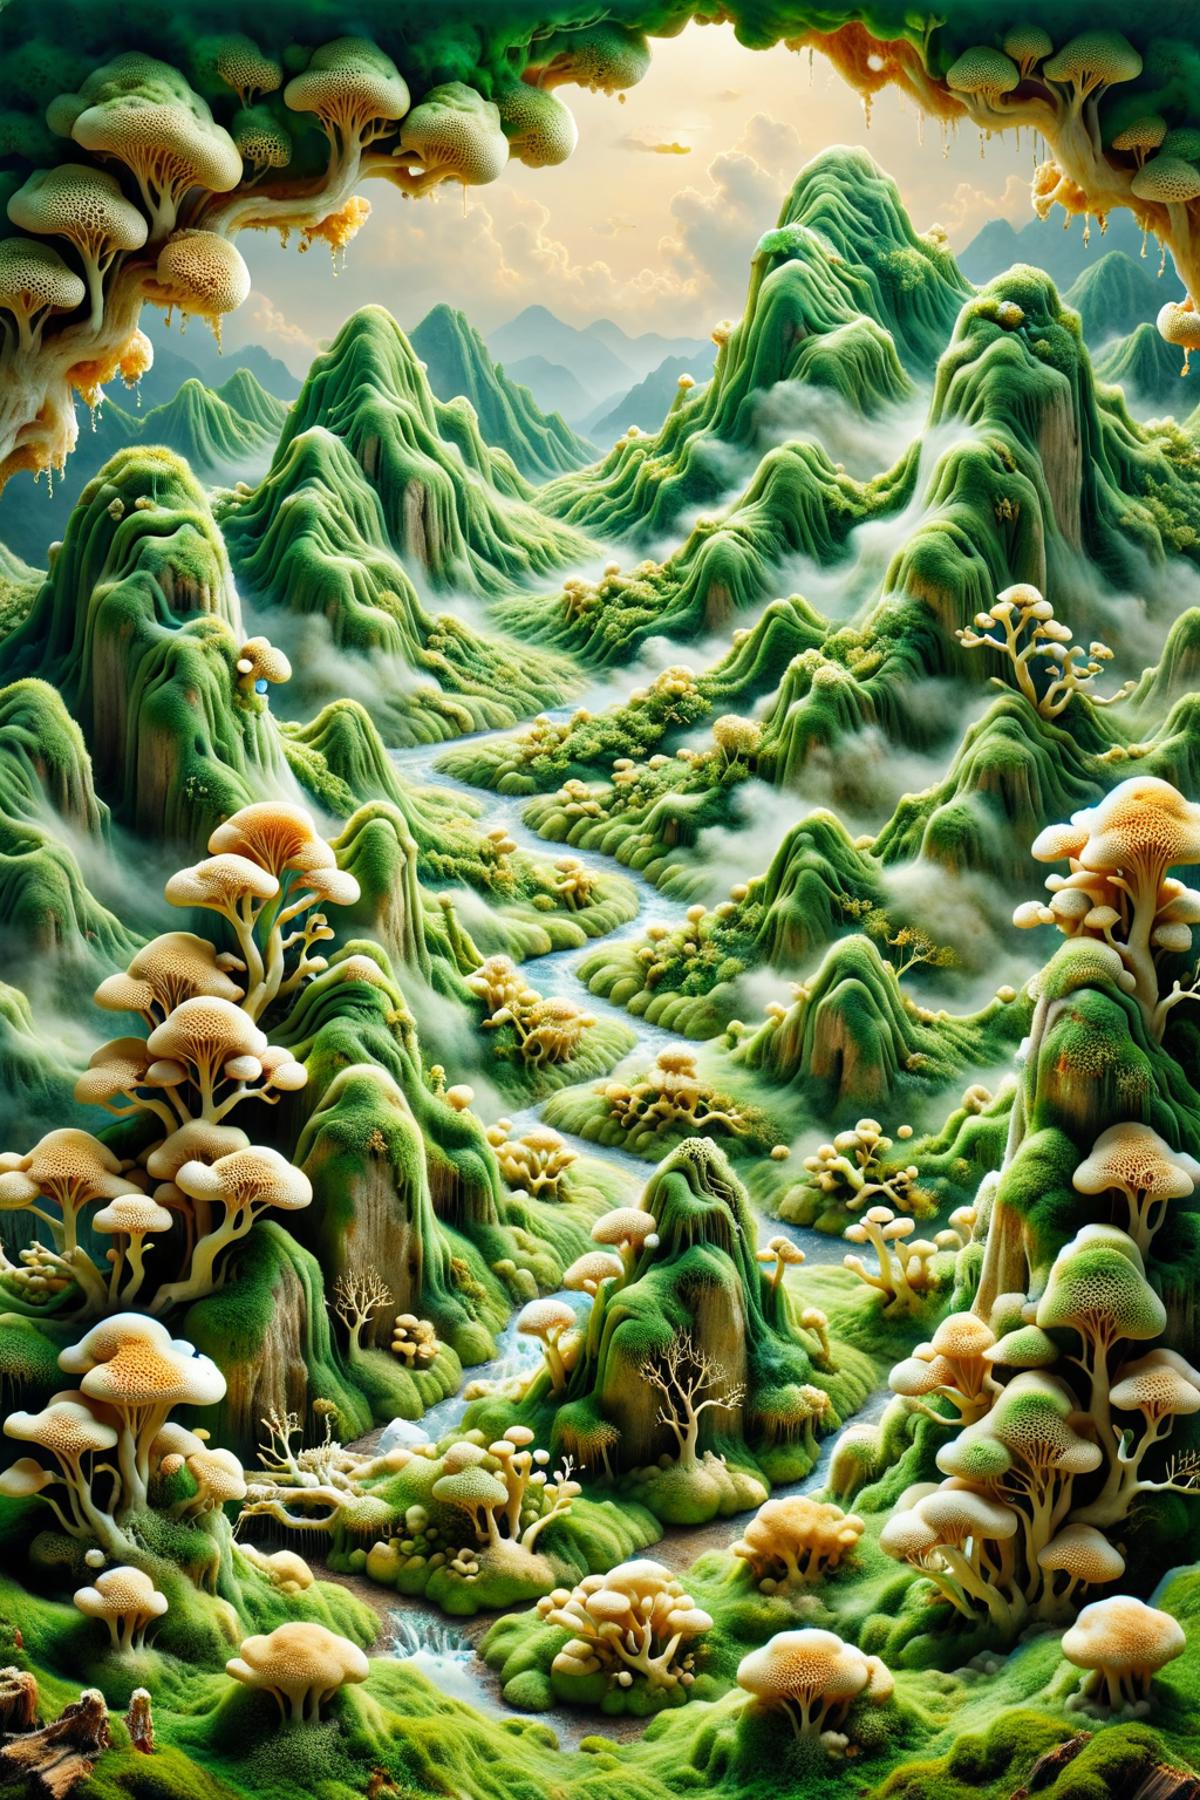 Mycelium Style [SDXL] image by CHINGEL